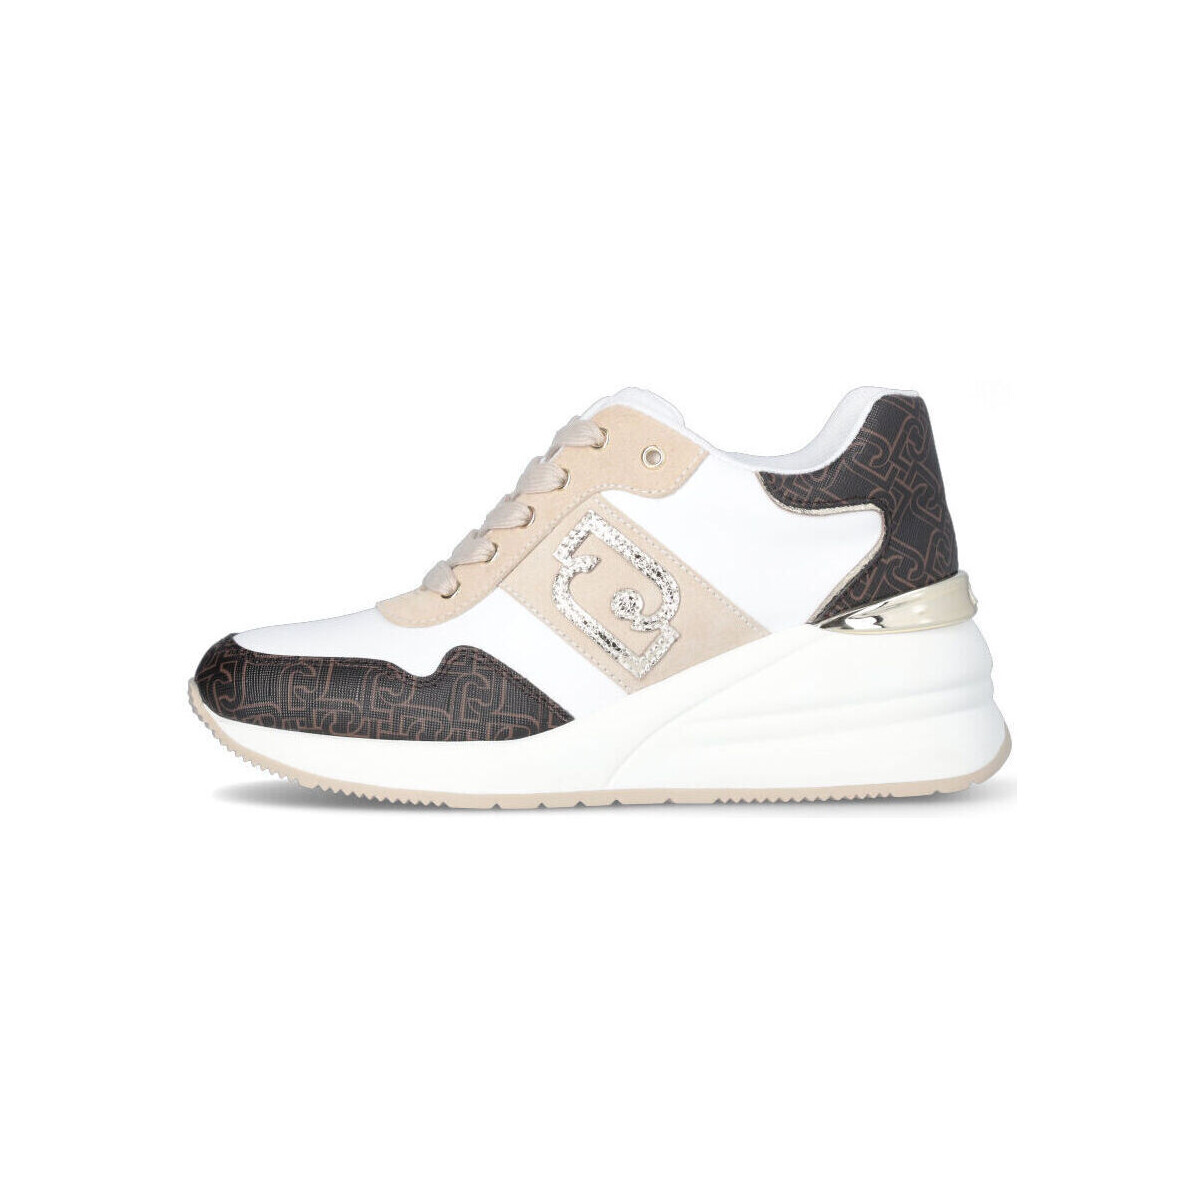 Liu Jo Blanc Sneakers monogramme avec semelle compensée FGOOZxwf